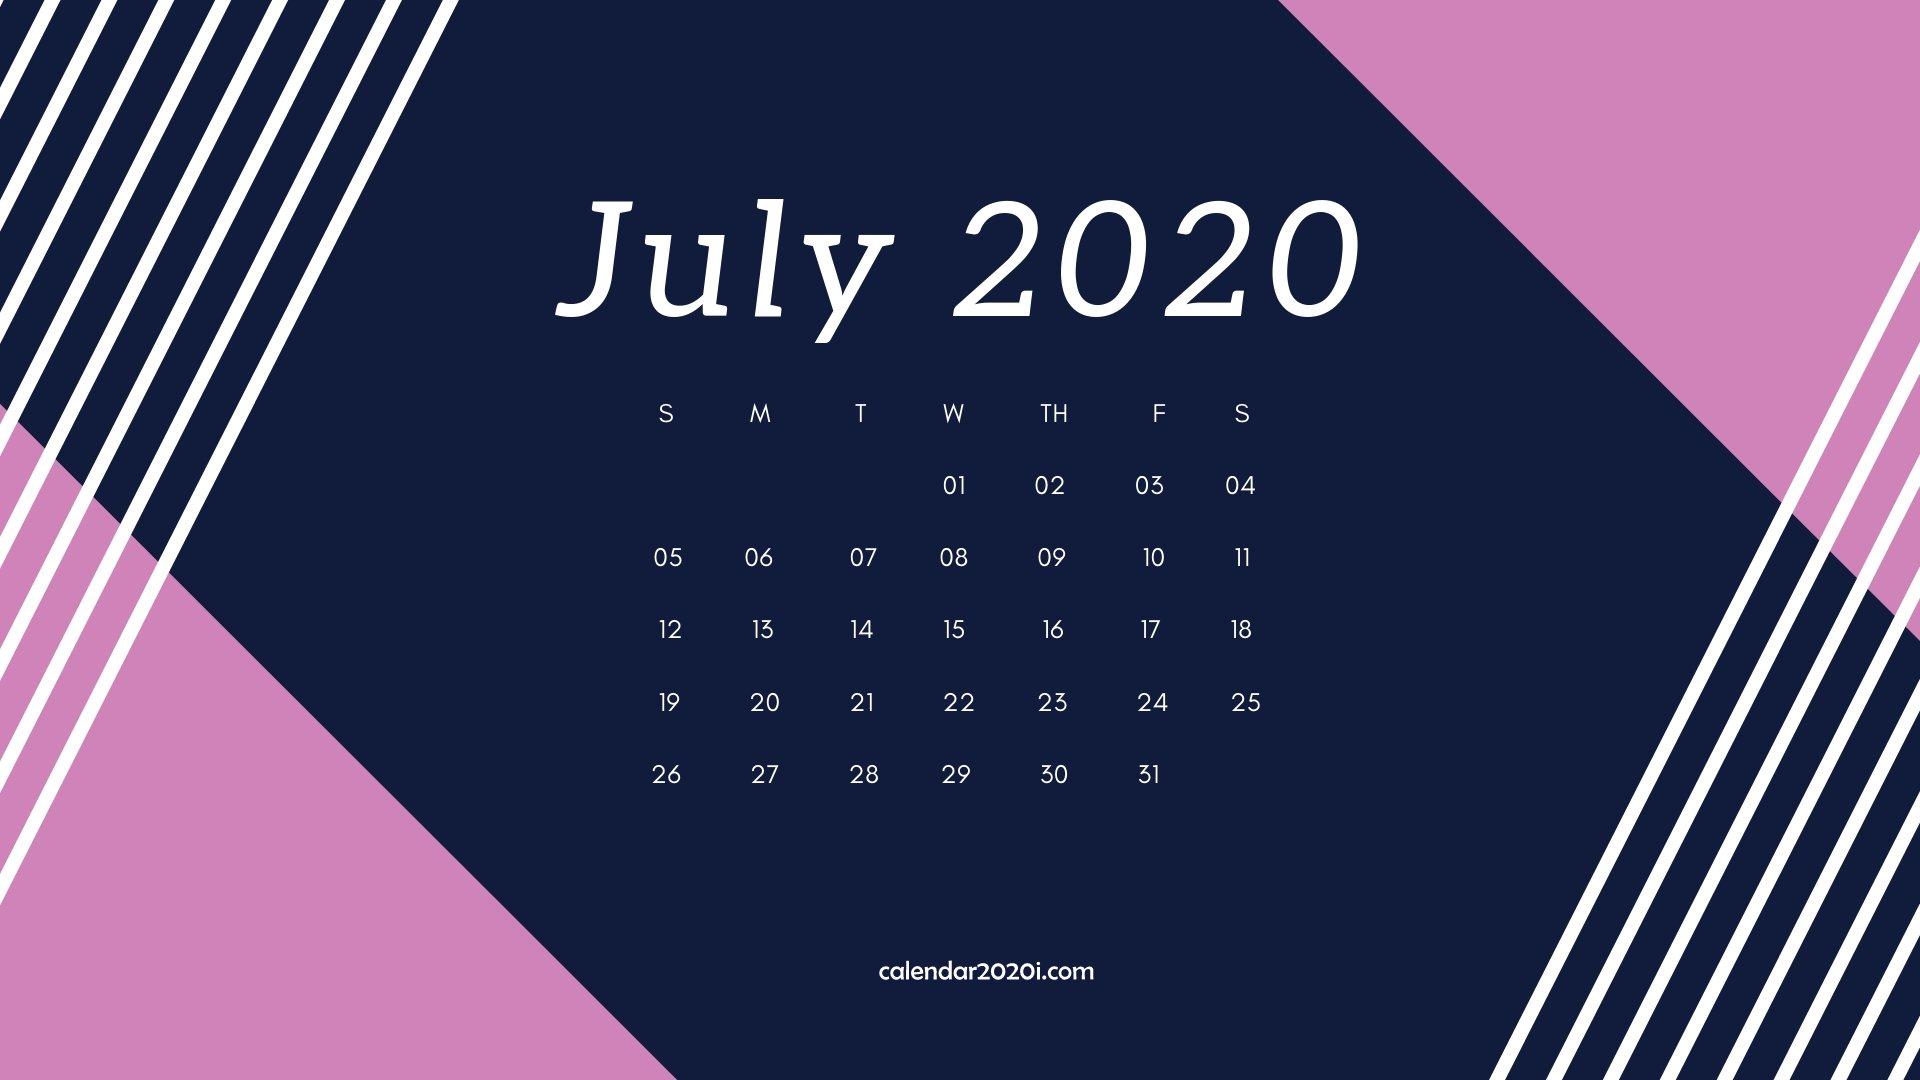 June 2020 Calendar Wallpapers - Wallpaper Cave